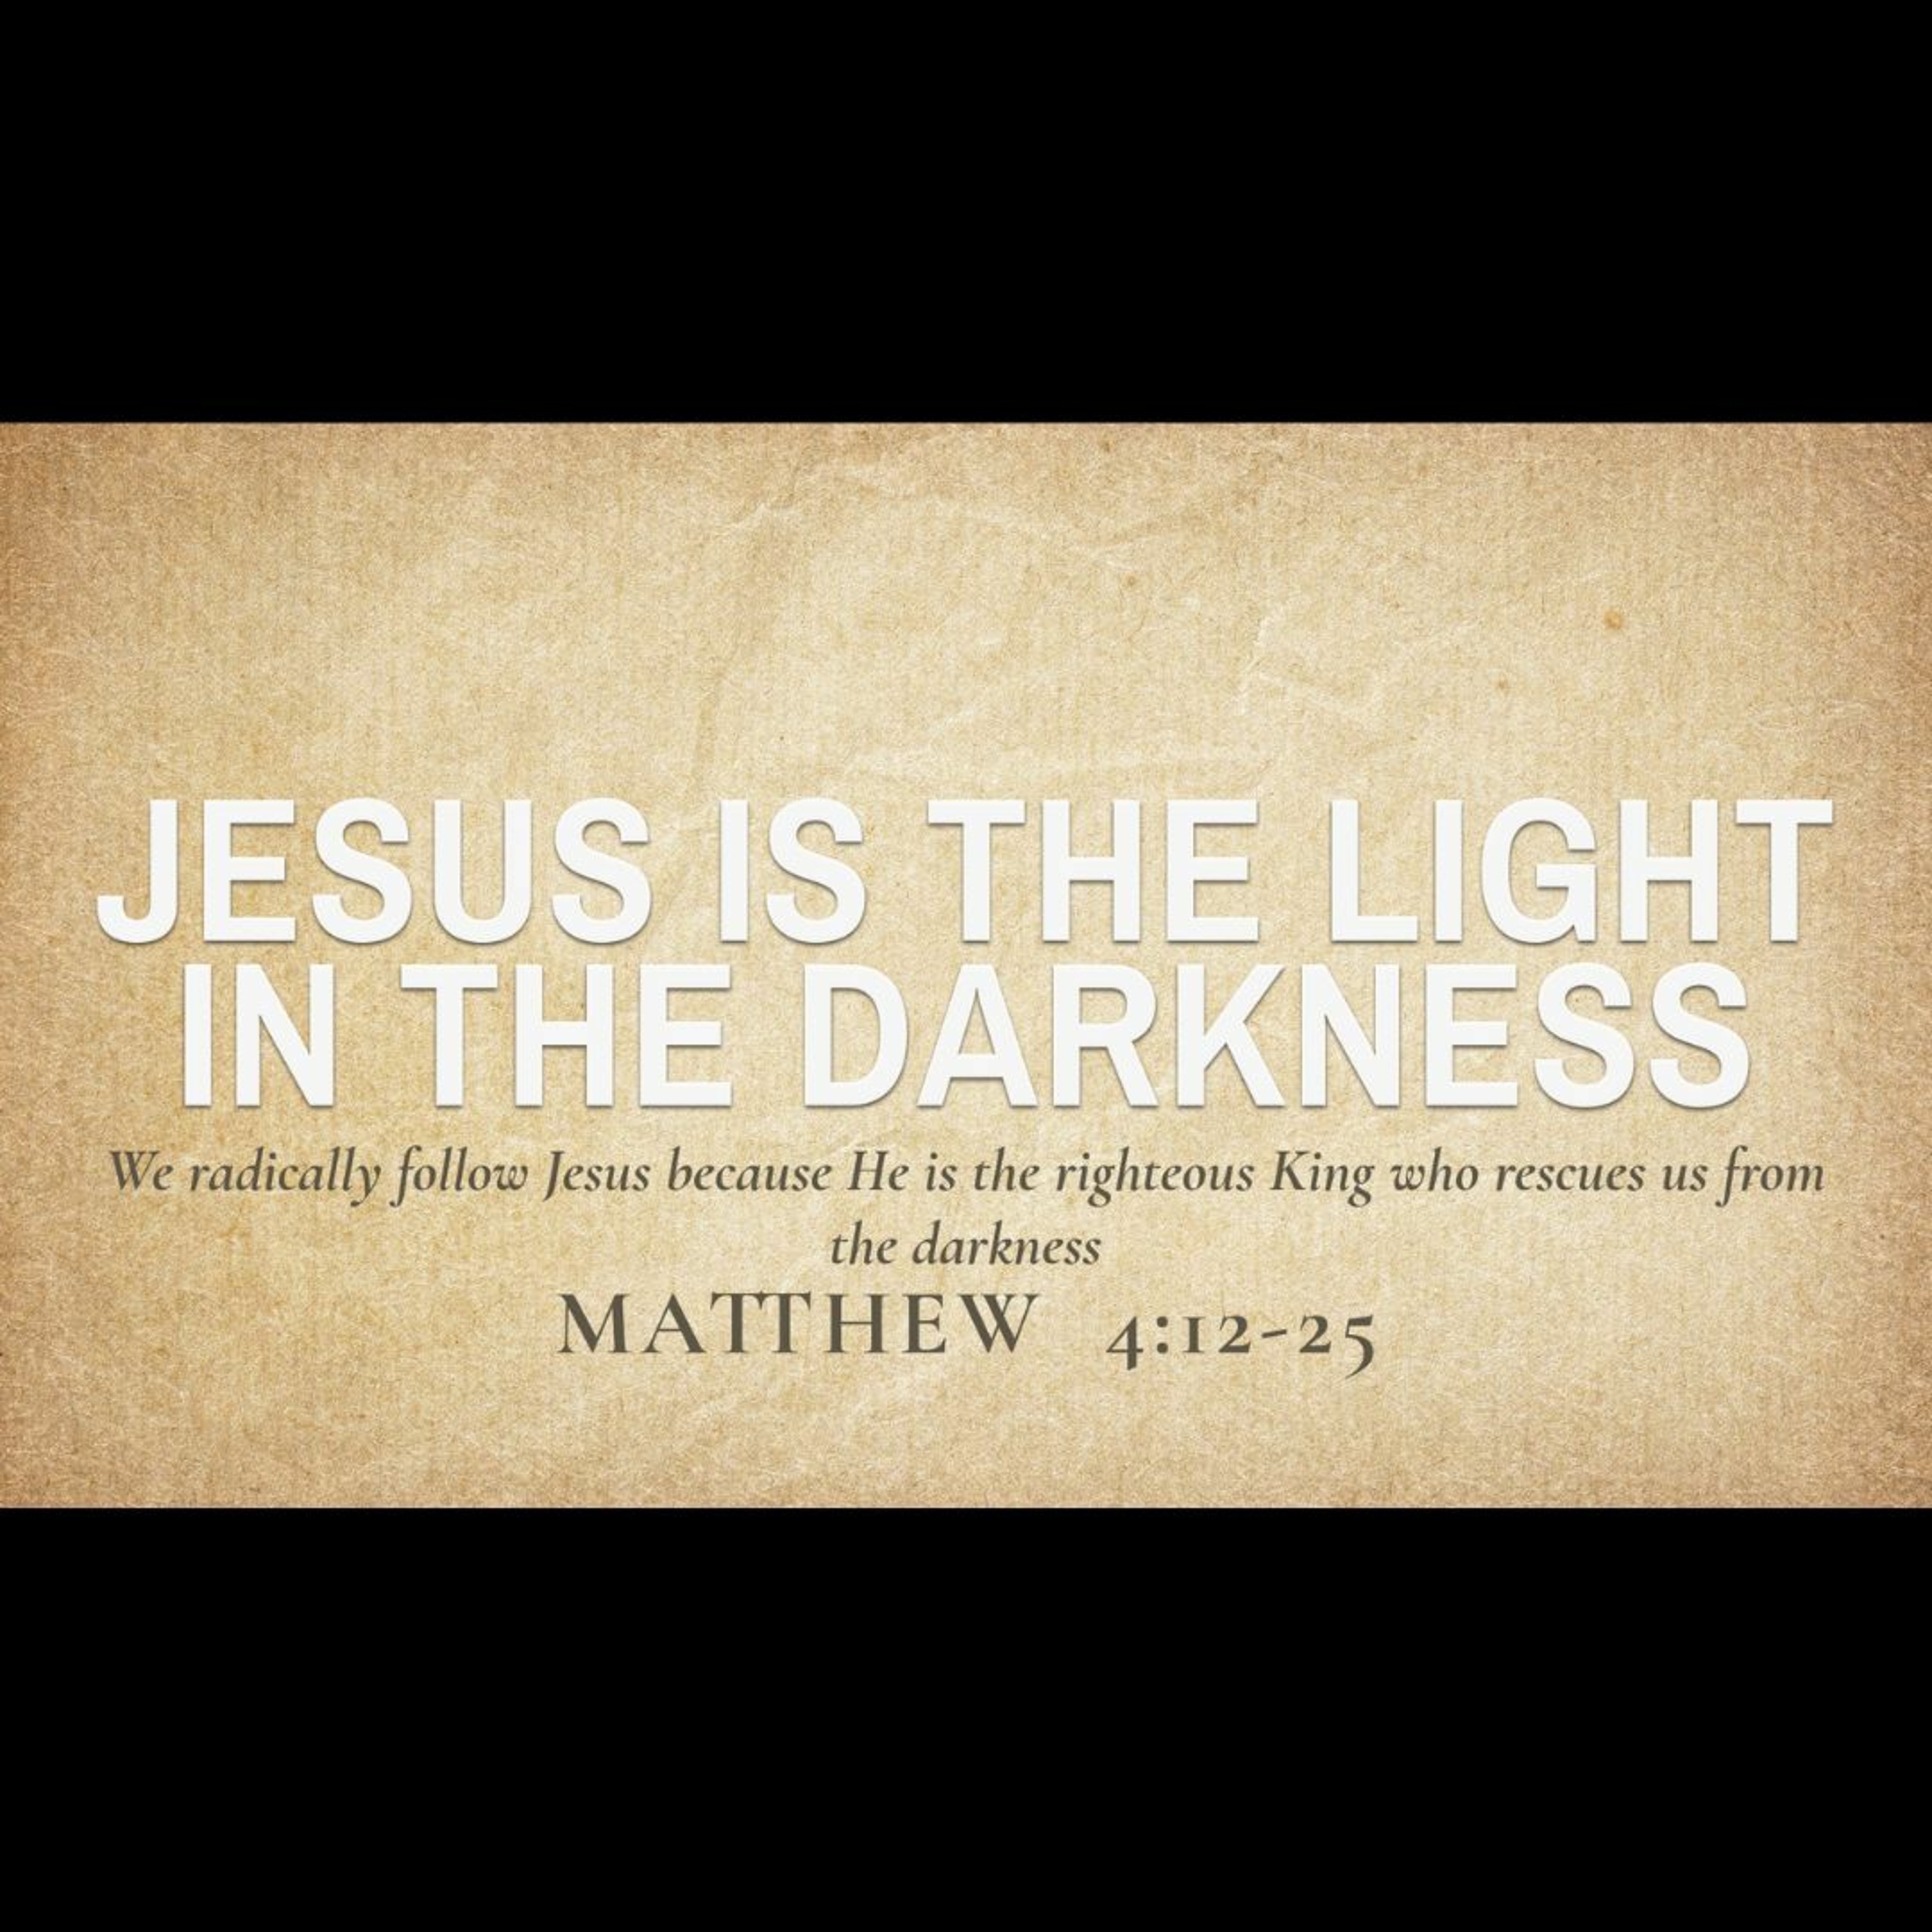 Jesus is the Light in the Darkness (Matthew 4:12-25)